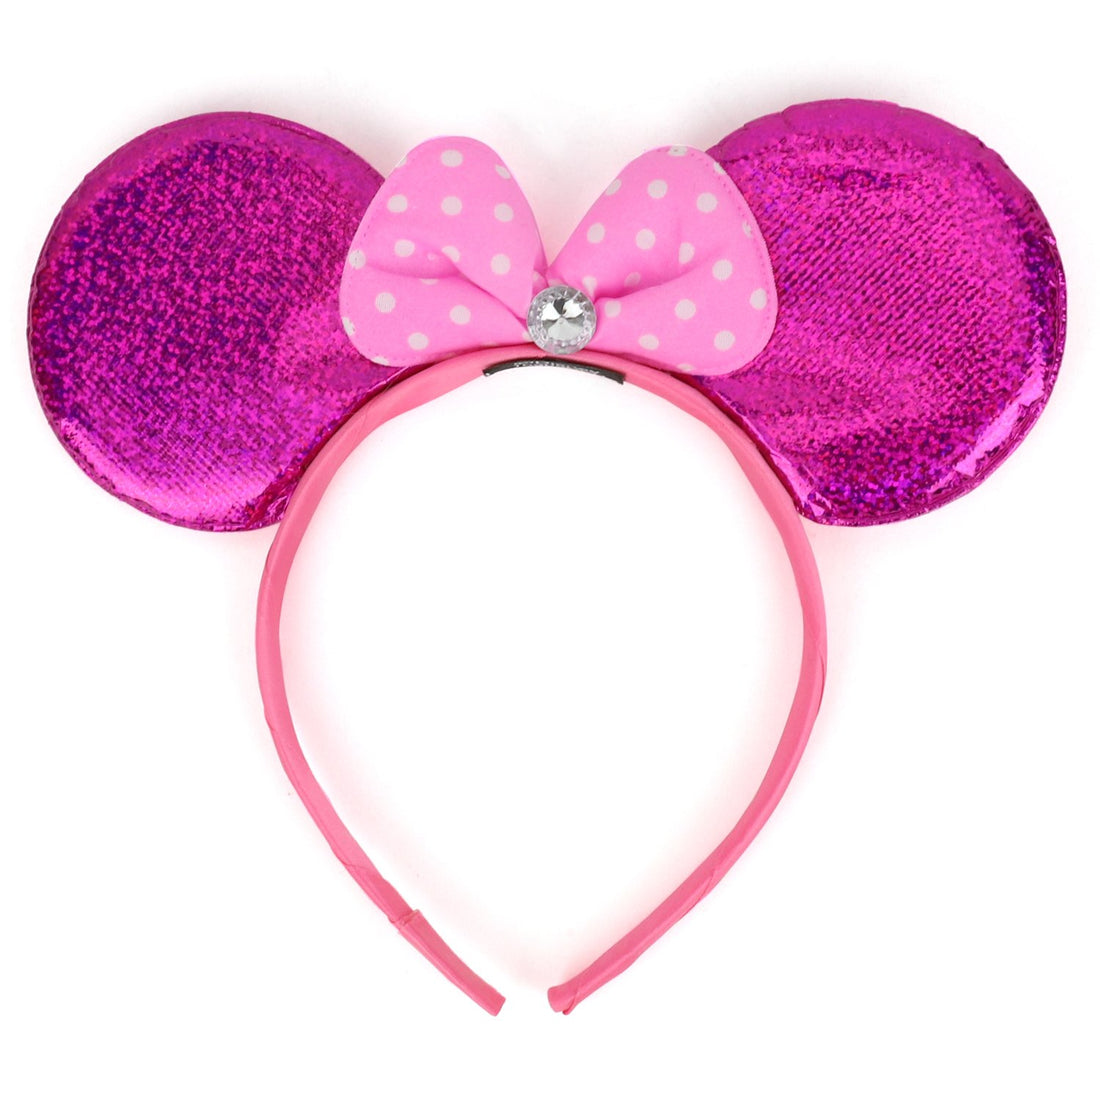 Trendy Apparel Shop Girl's Minnie Mouse Ear Shaped Foil Headband 2PK